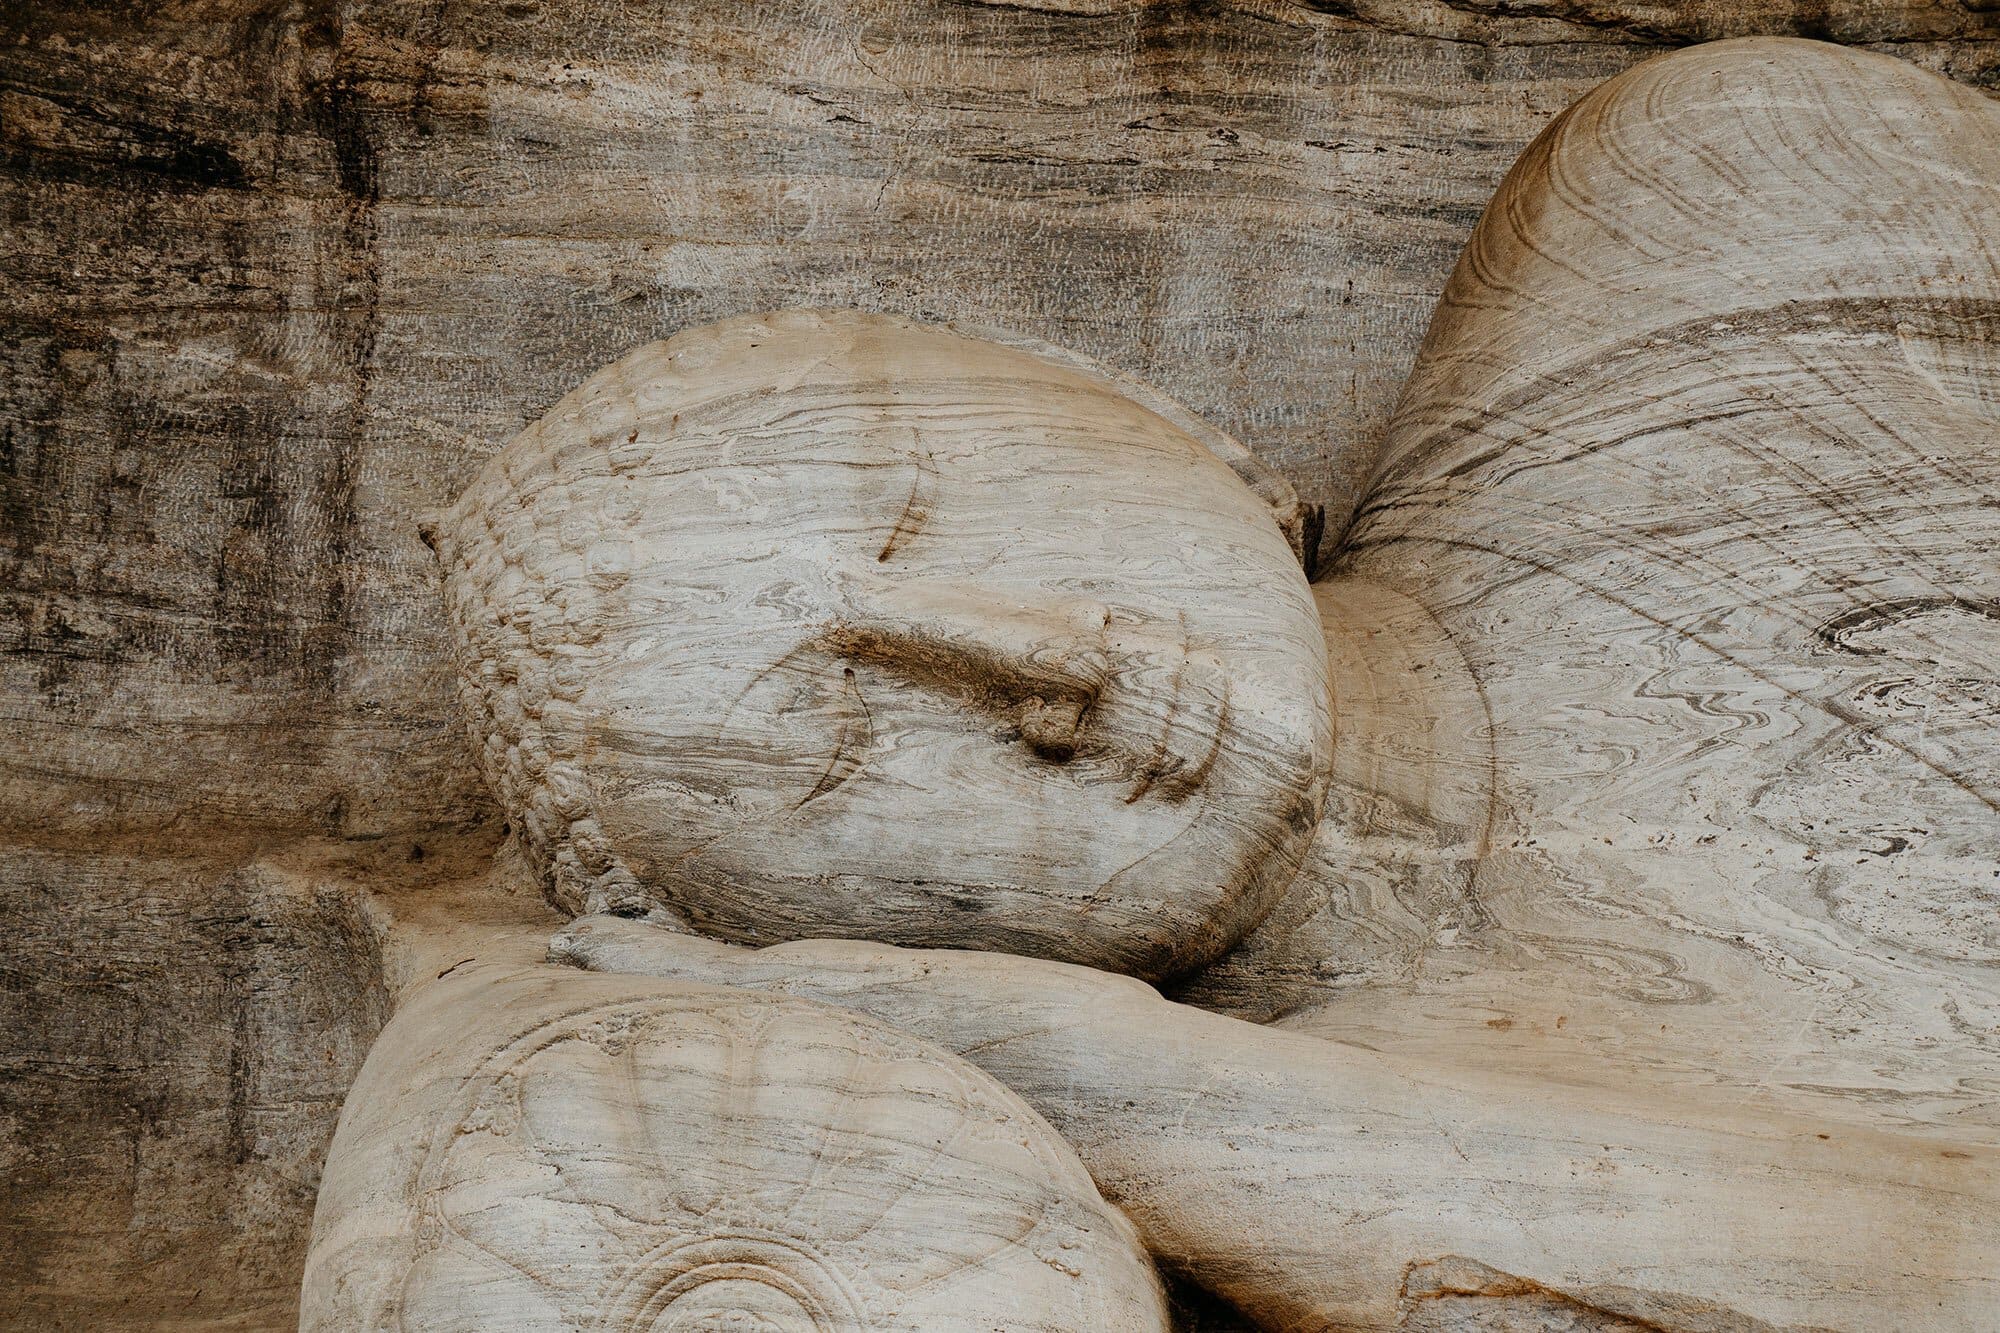 A guide to the ancient city of Polonnaruwa Sri Lanka